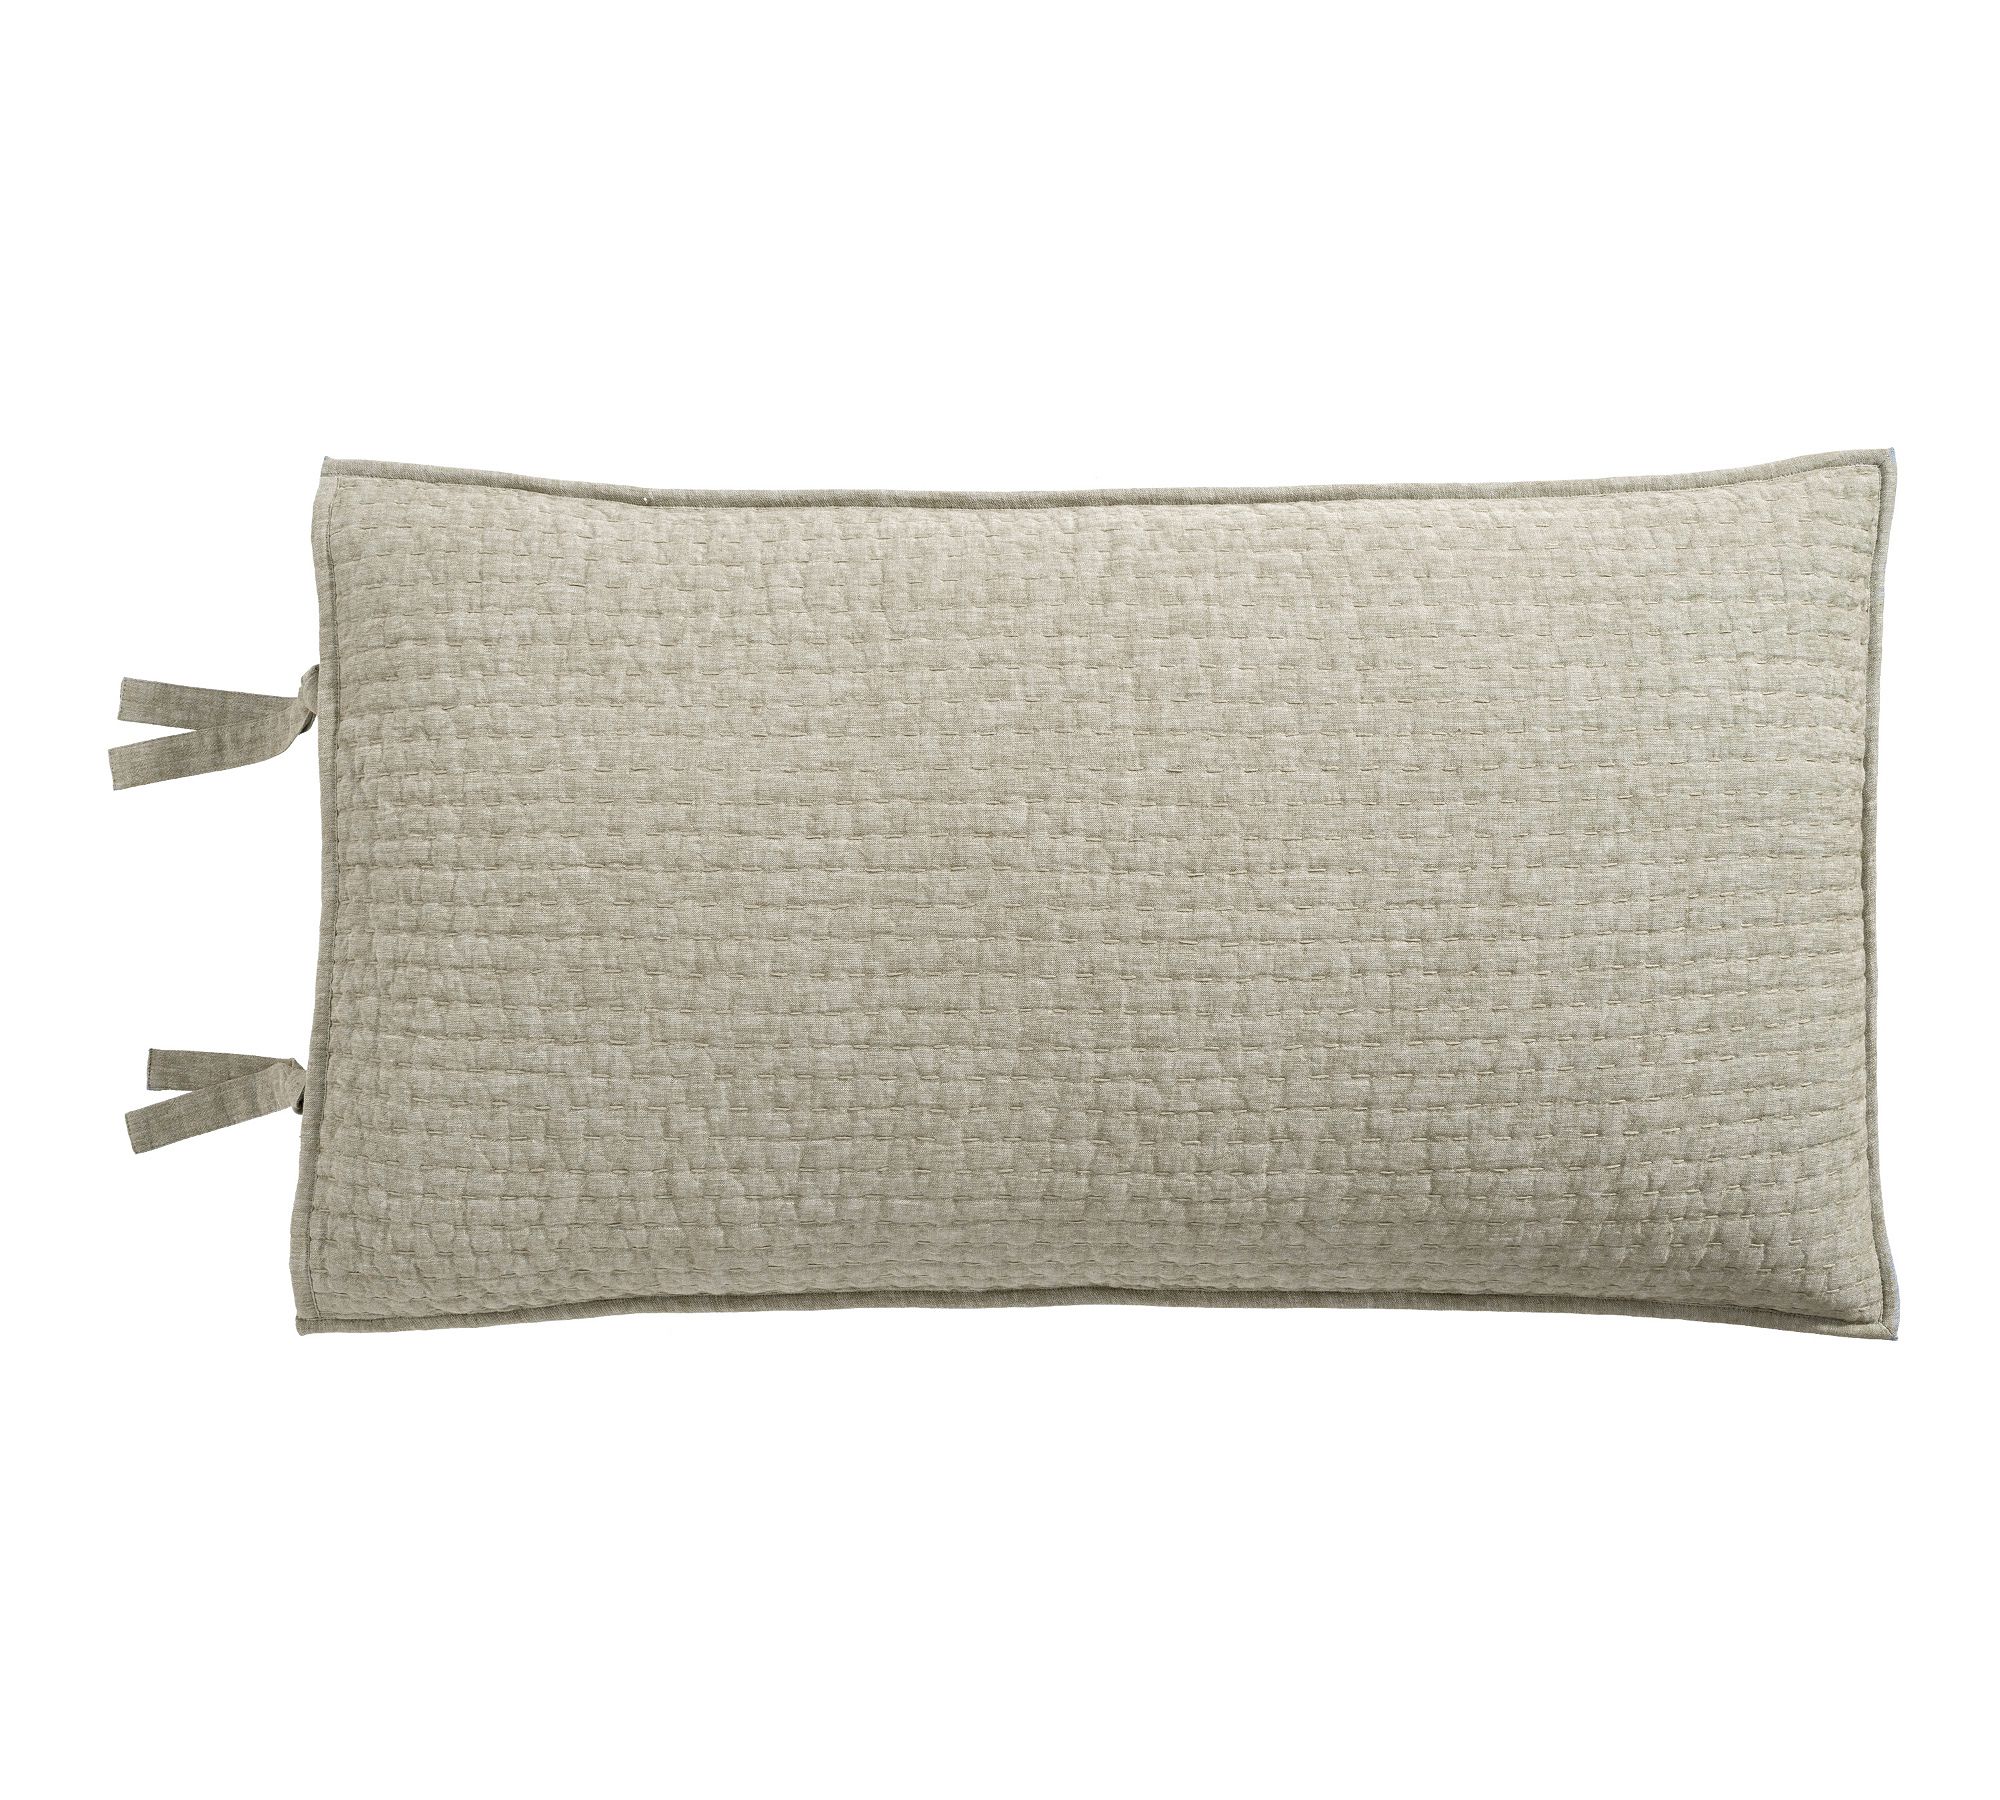 Pick-Stitch Handcrafted Cotton/Linen Quilted Sham